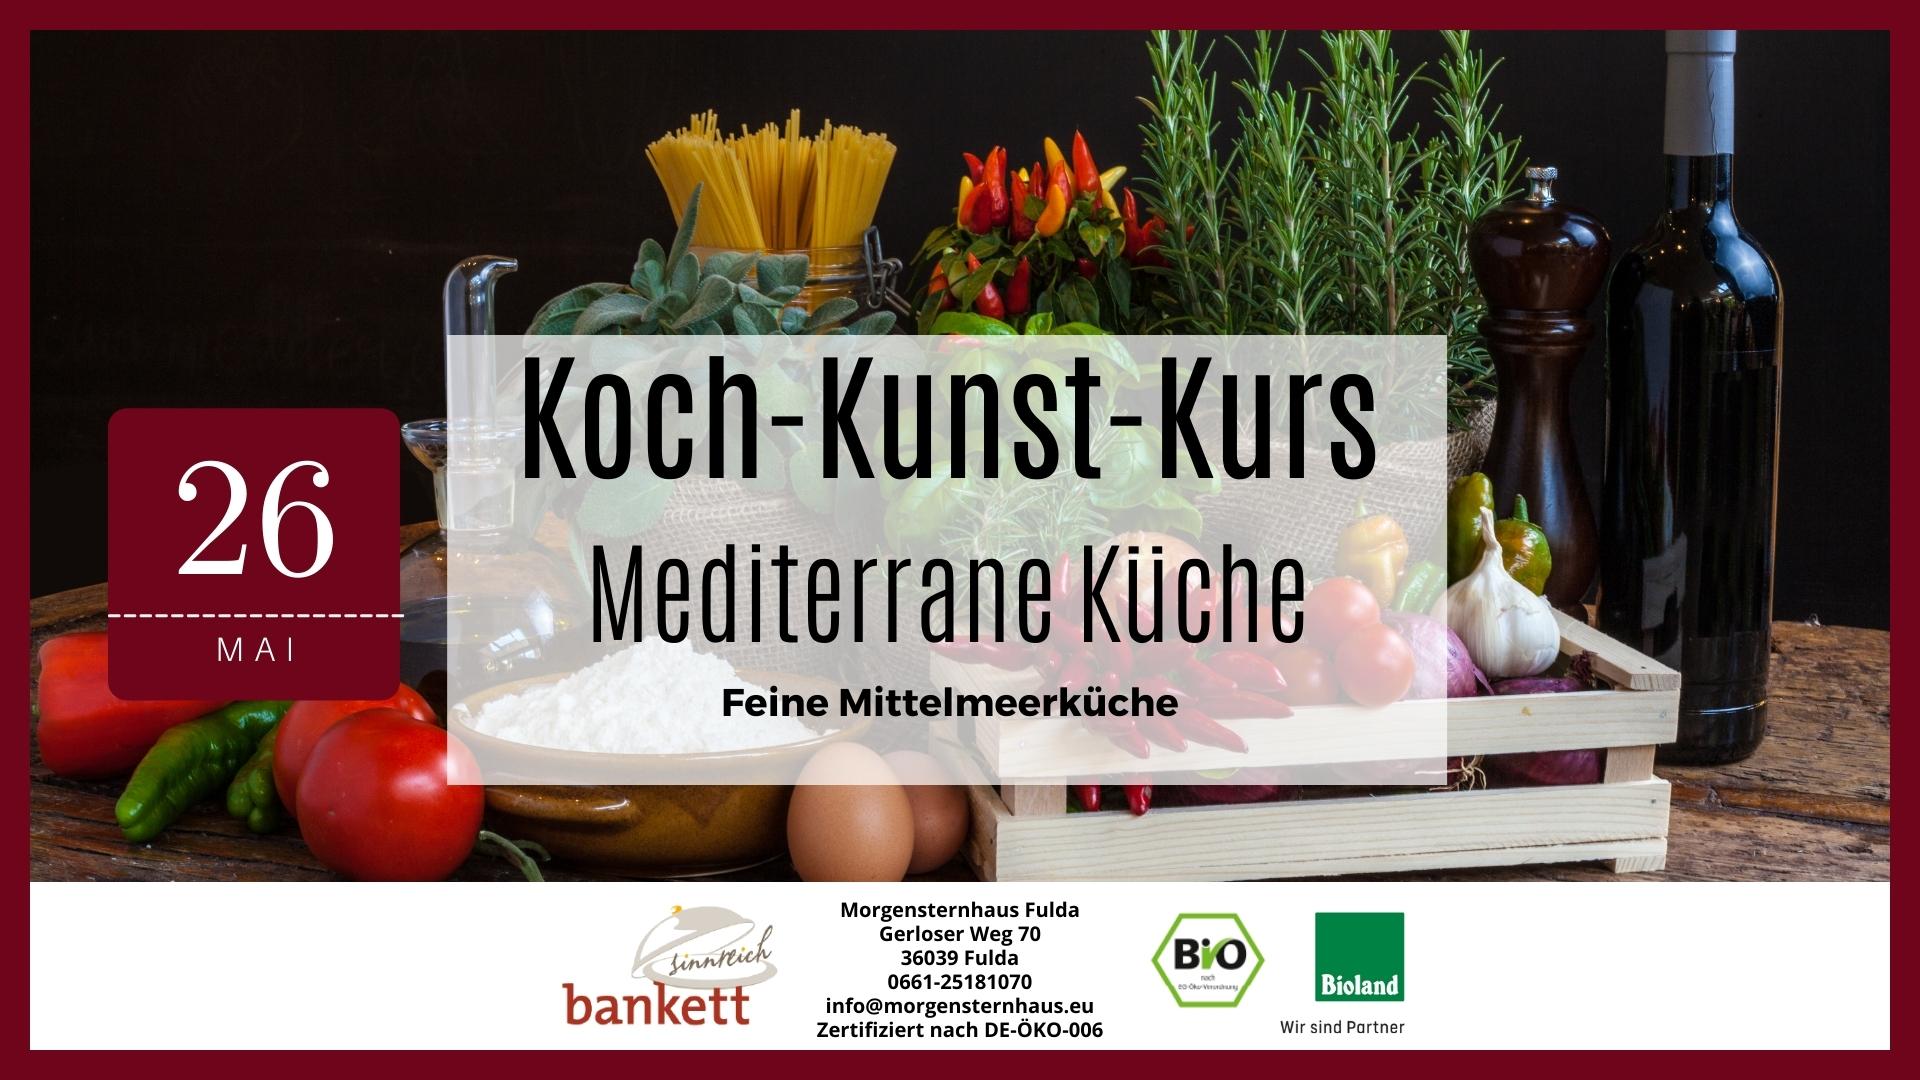 Koch-Kunst-Kurs_MediterraneKueche